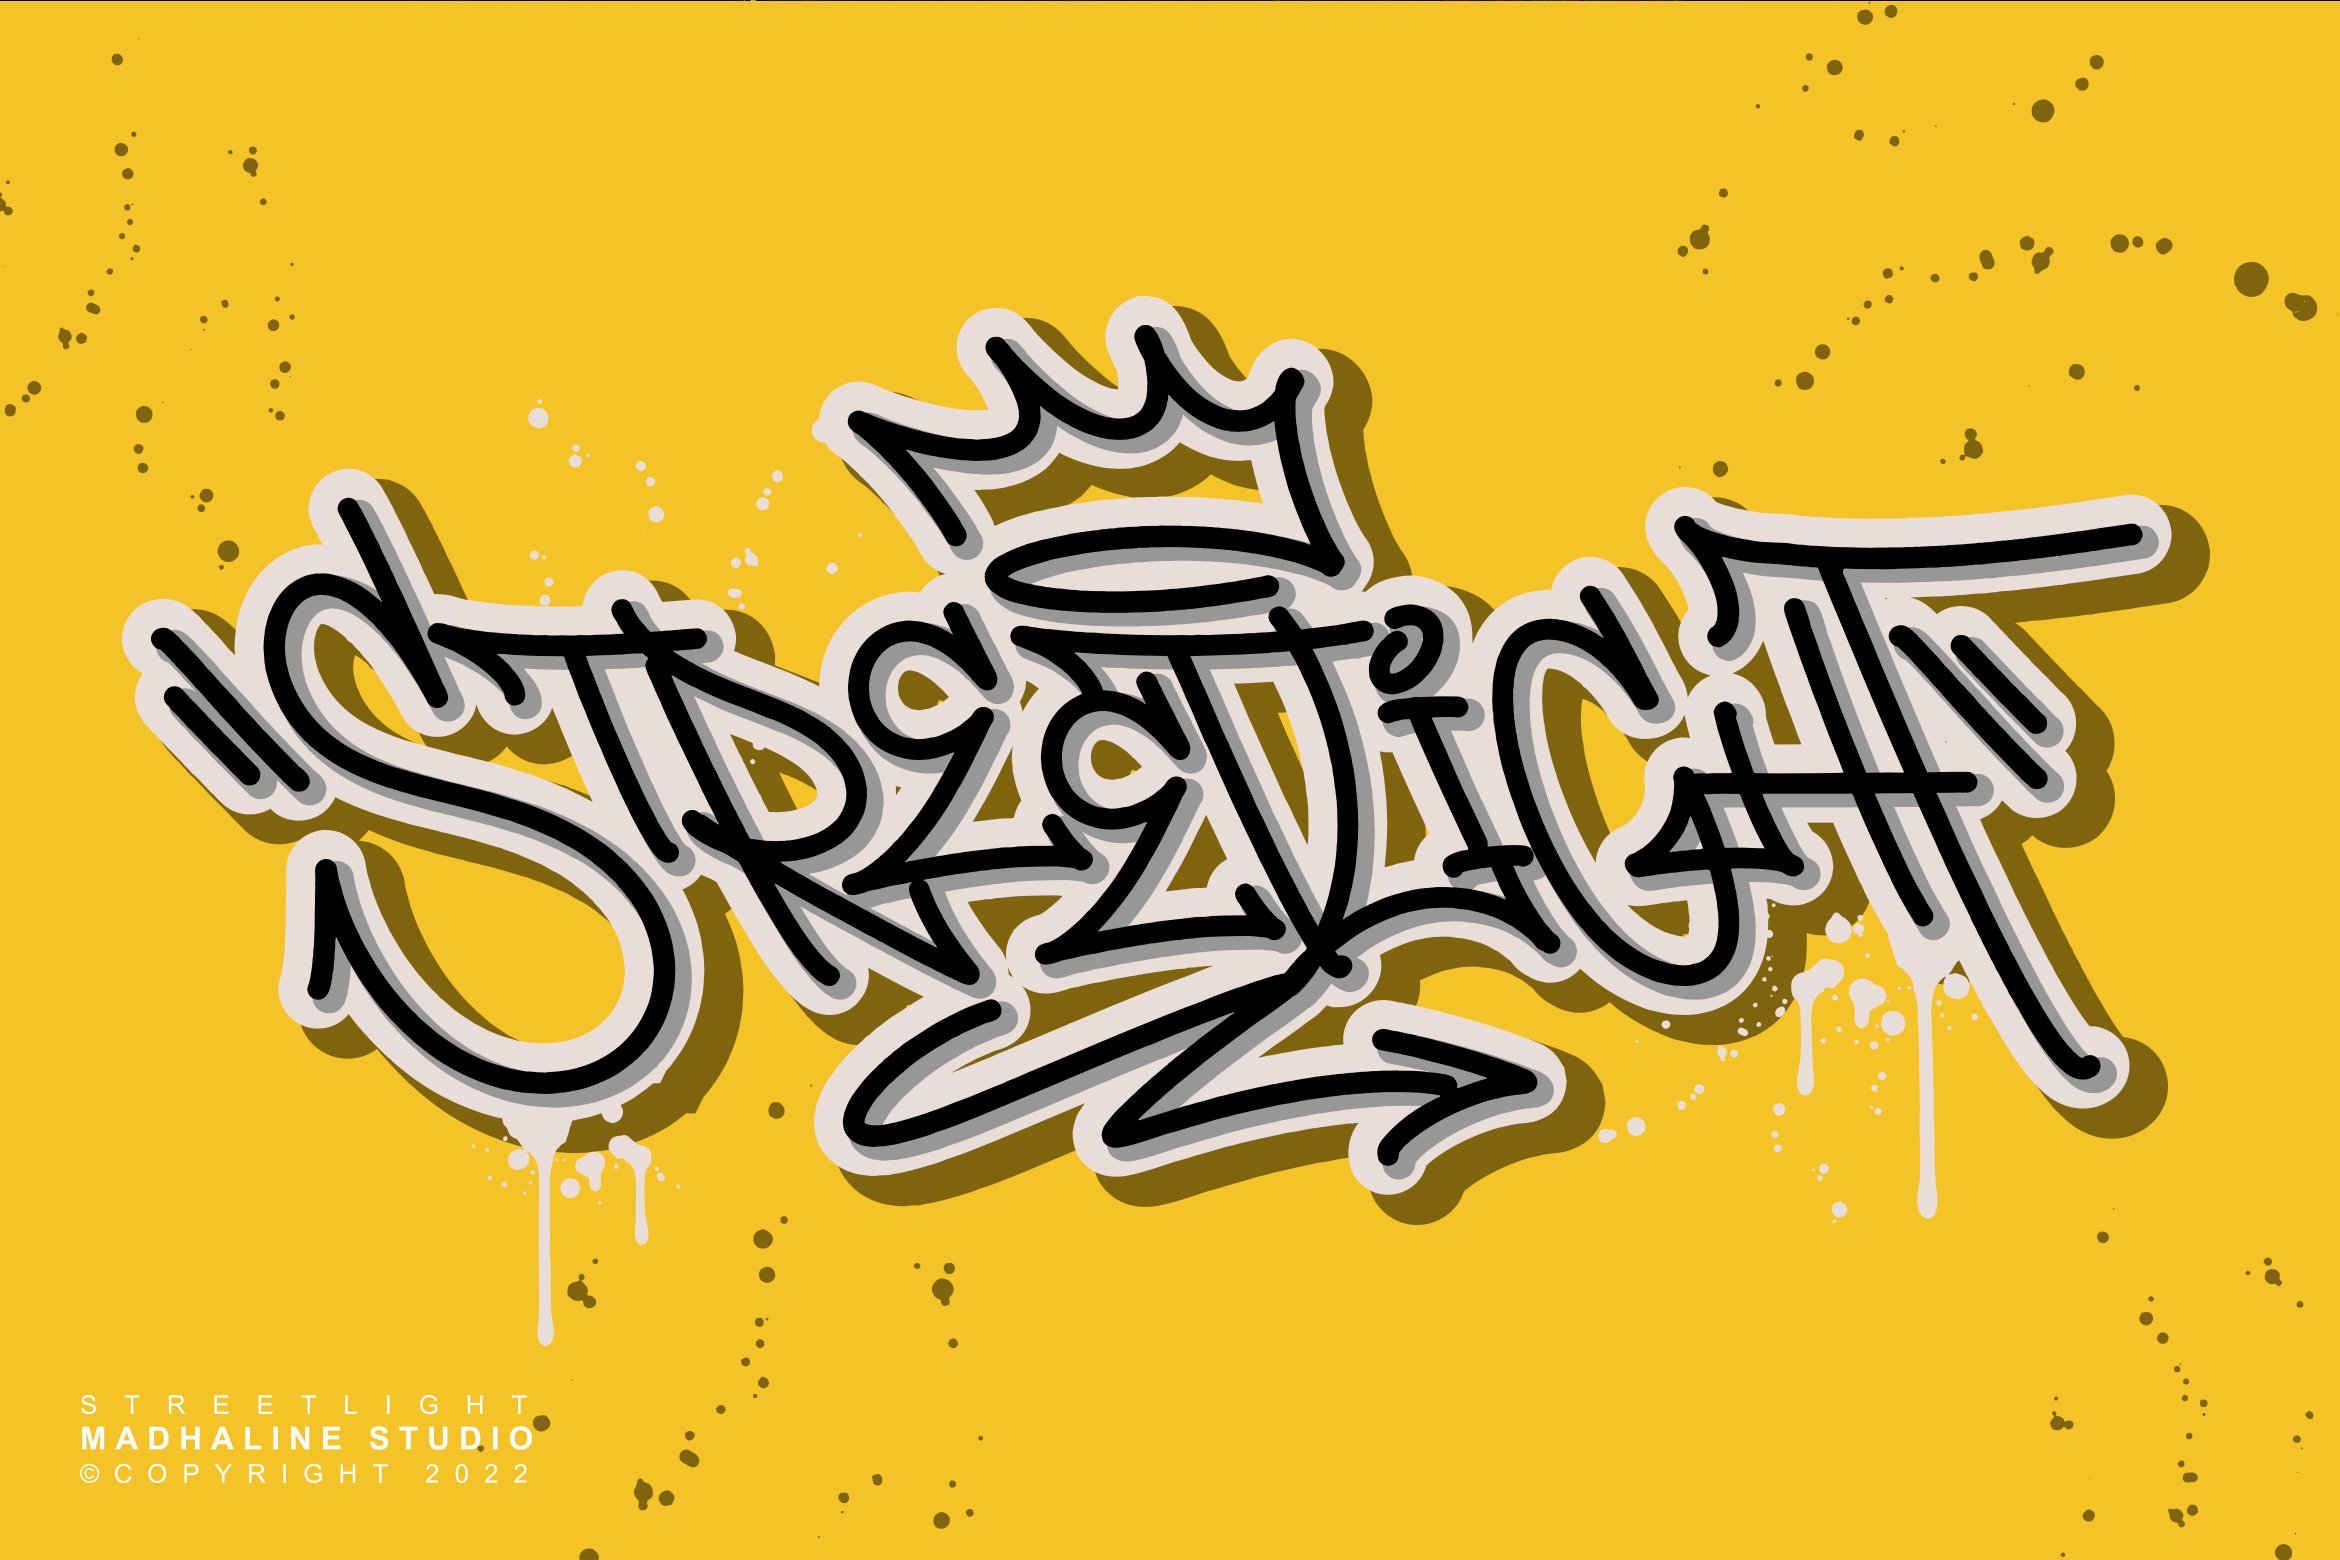 Streetlight | Graffiti Font cover image.